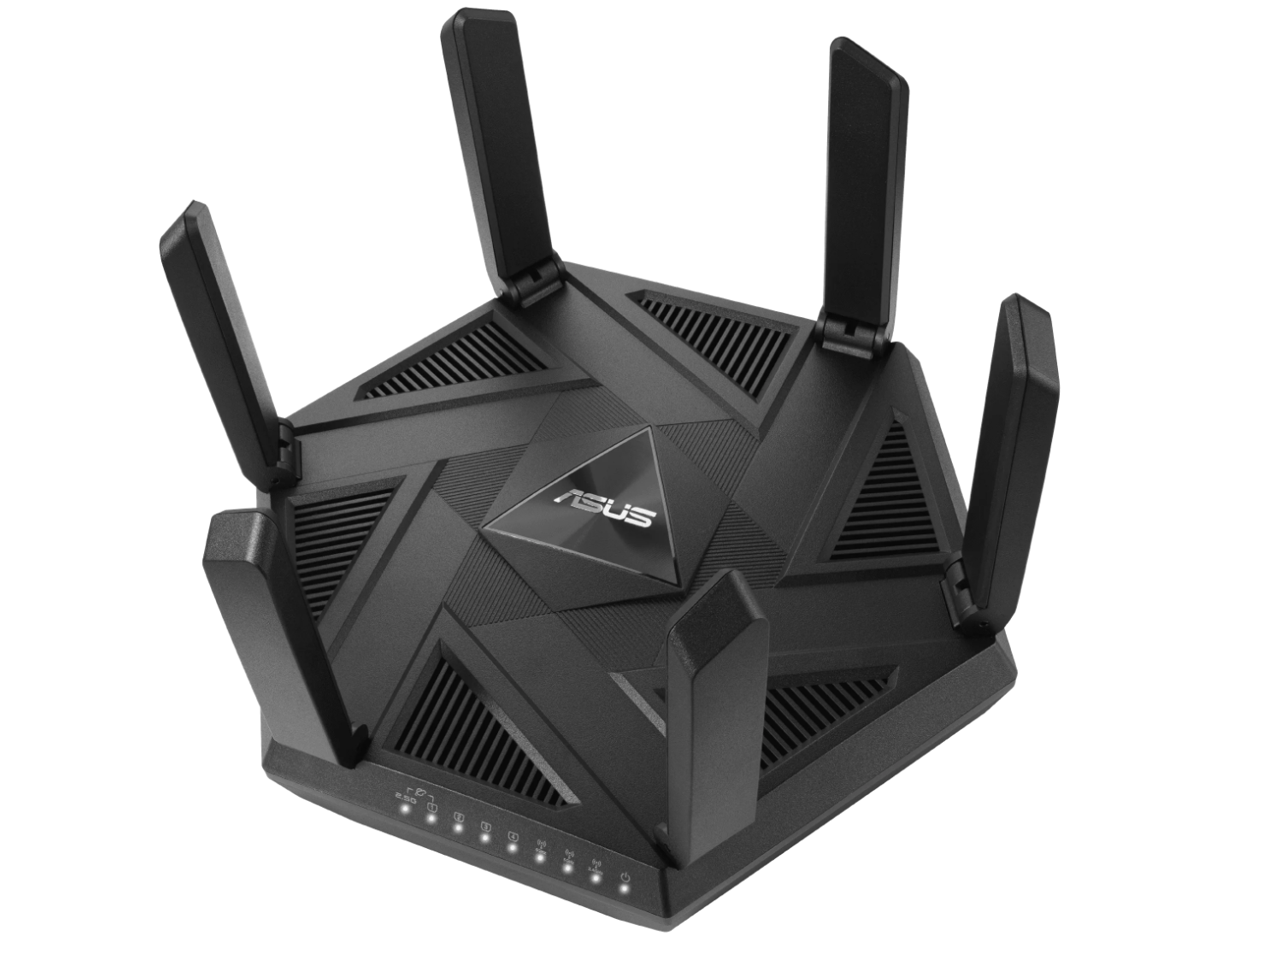 ASUS RT-AXE7800 Tri-band WiFi 6E (802.11ax) Router @Newegg $250.49